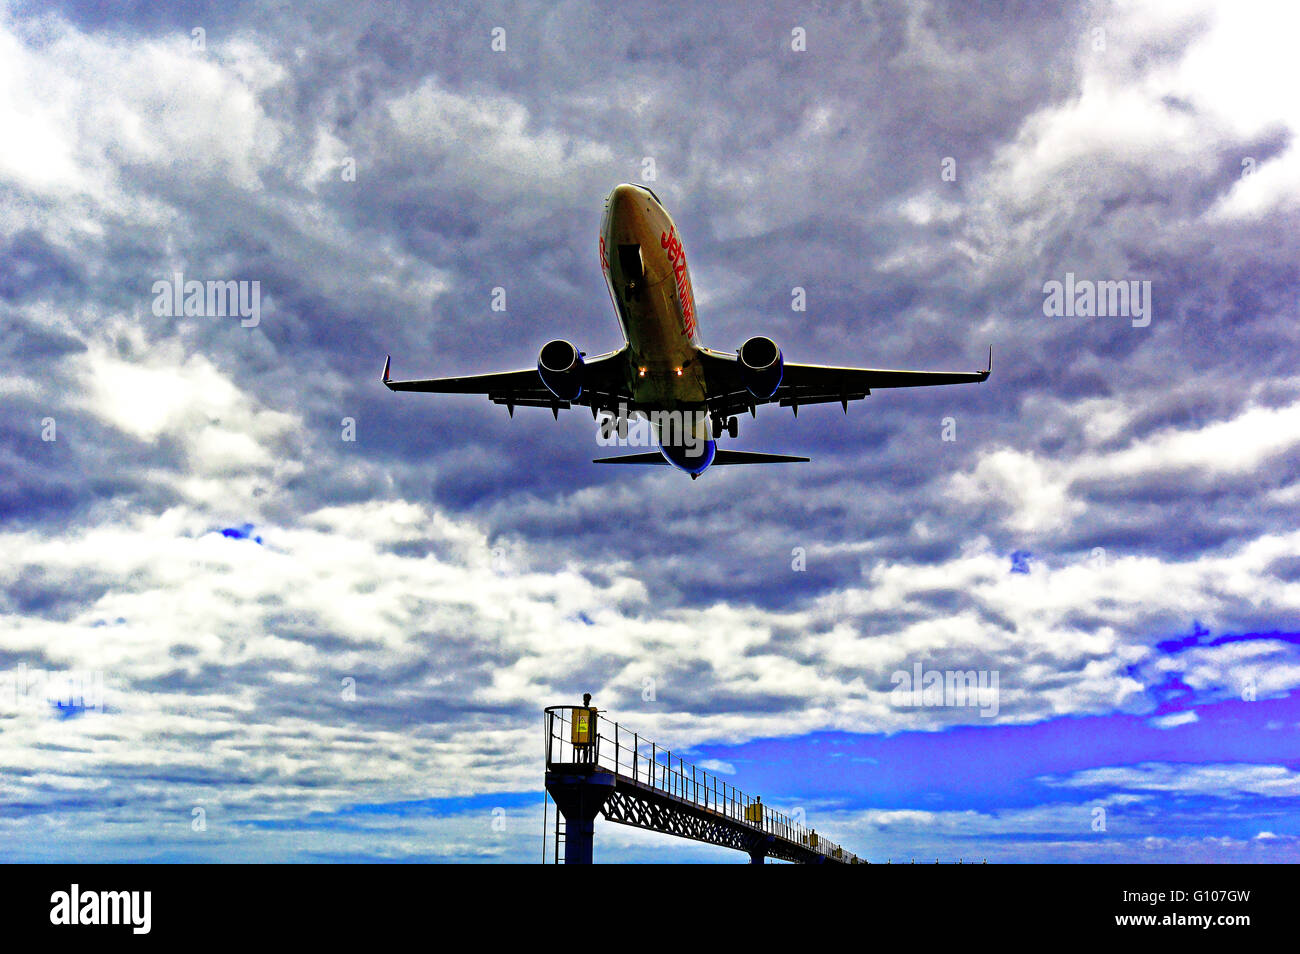 Lanzarote Jet2 passenger plane landing at Arrecife airport Stock Photo